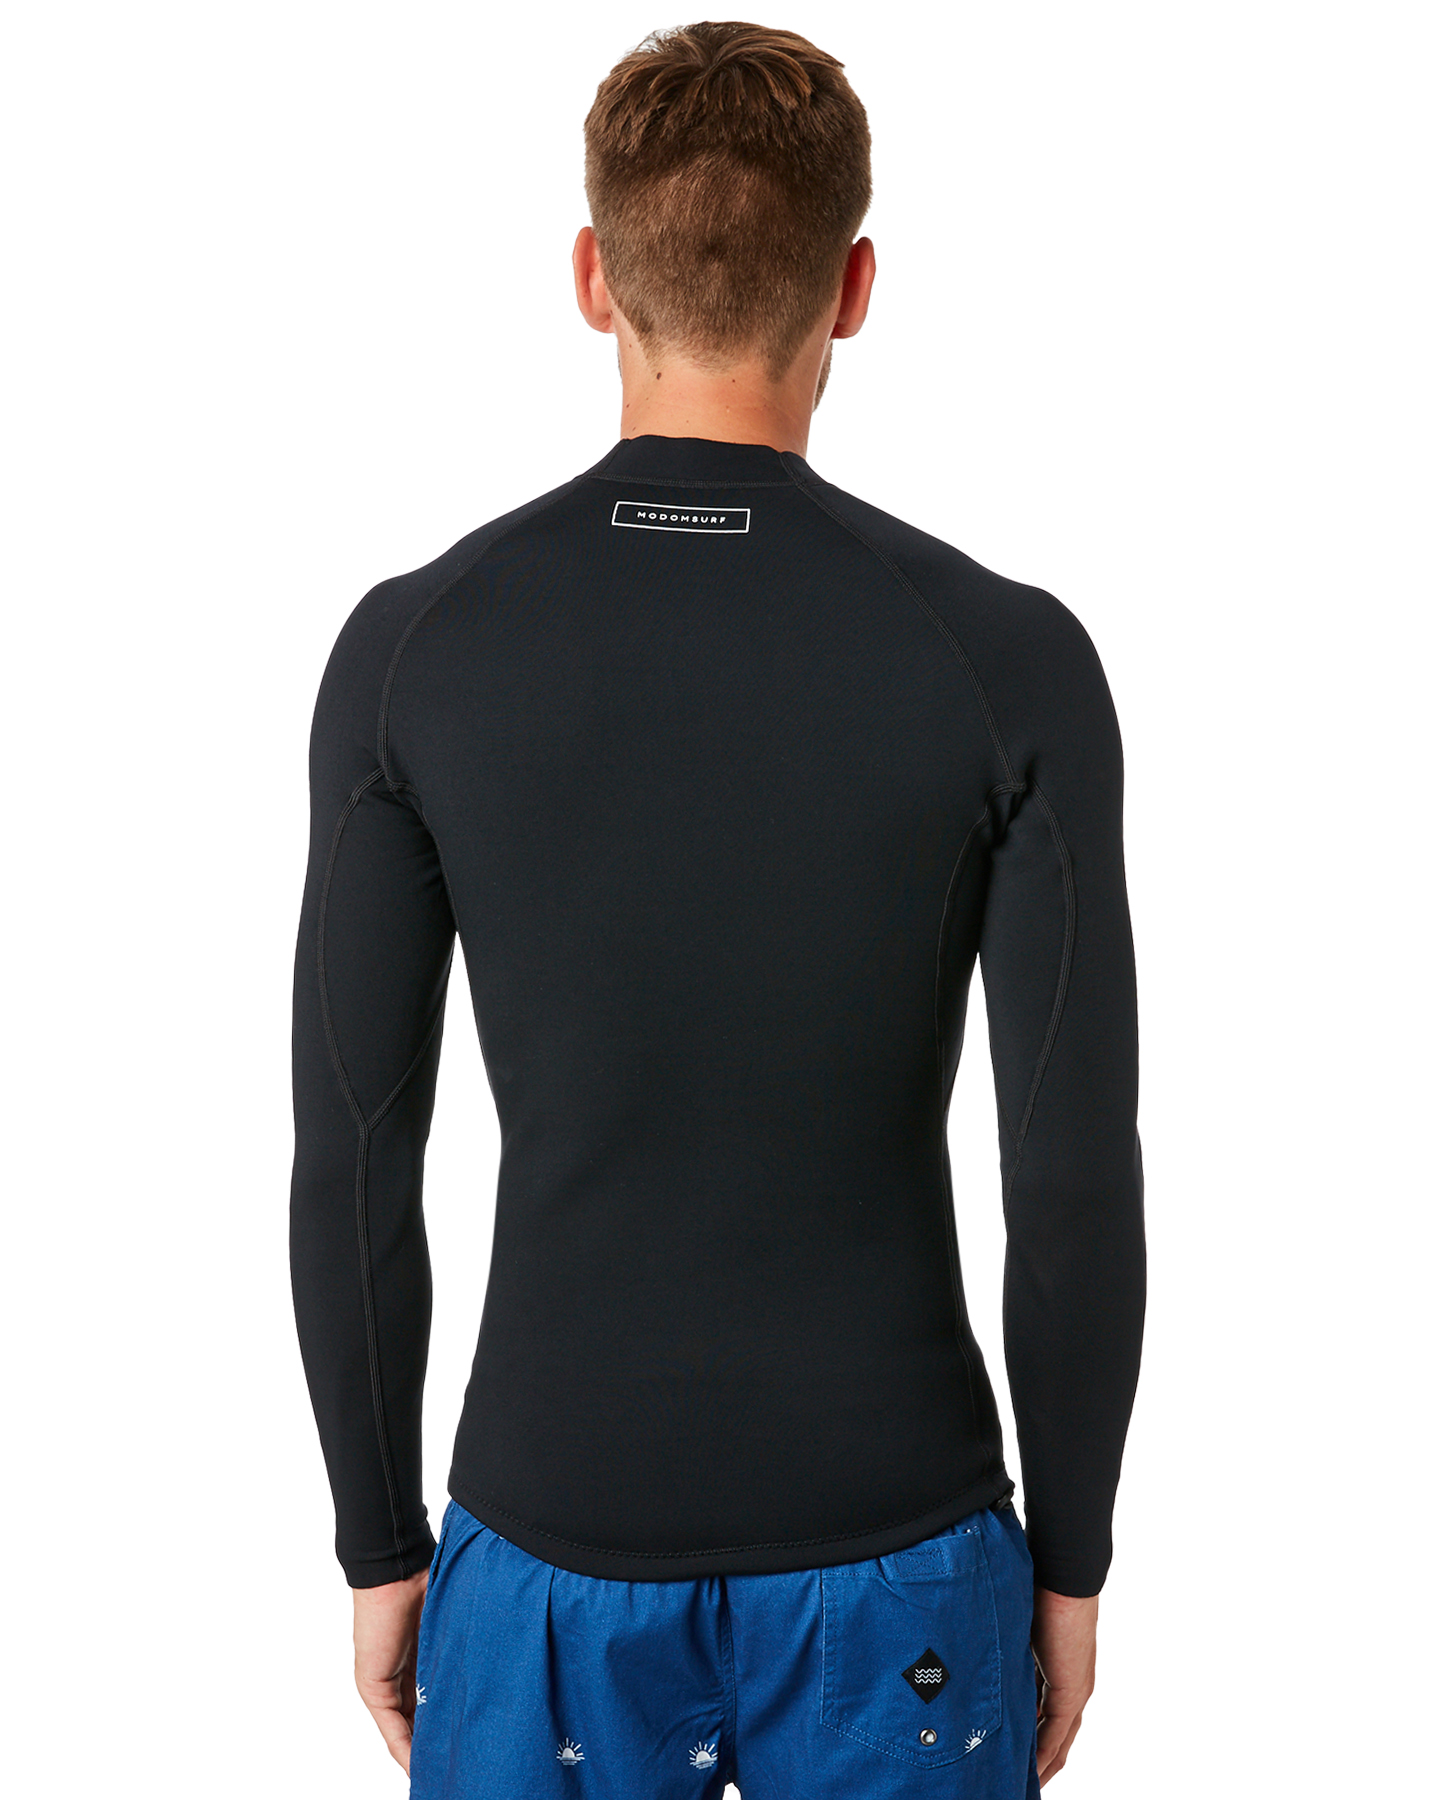 Modom 1-5Mm Blackness Wetsuit Top - Blackness | SurfStitch